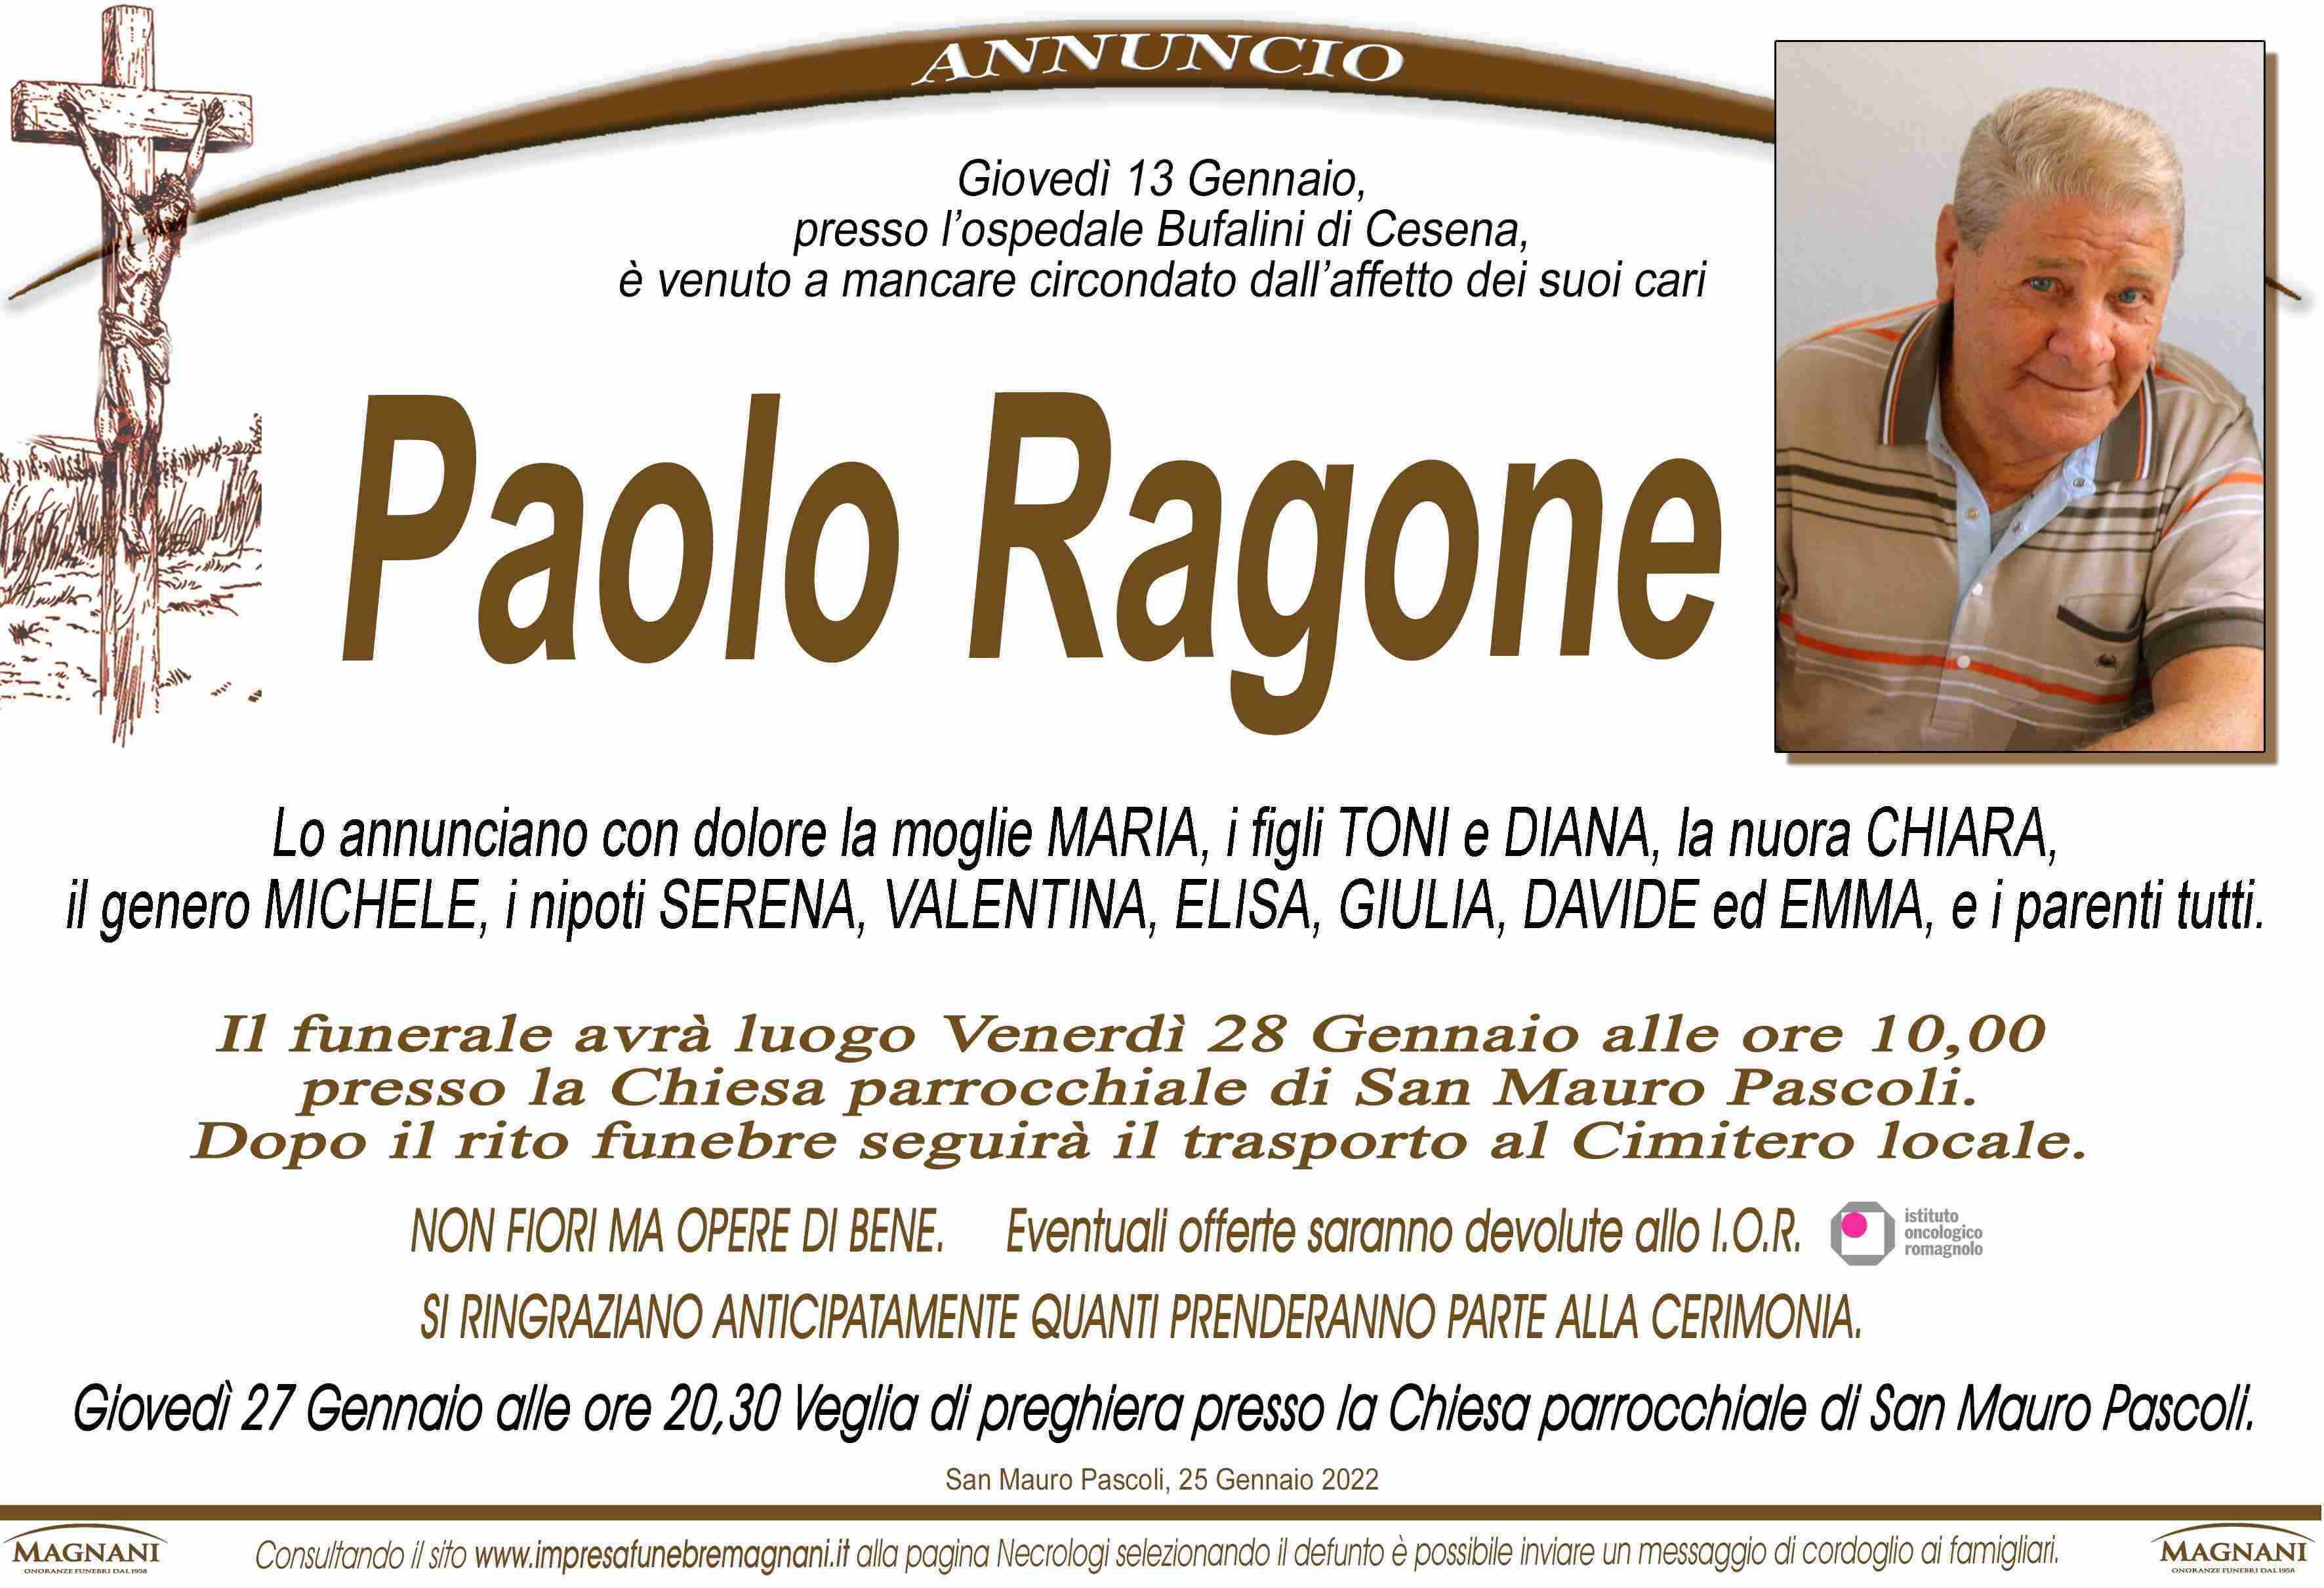 Paolo Ragone